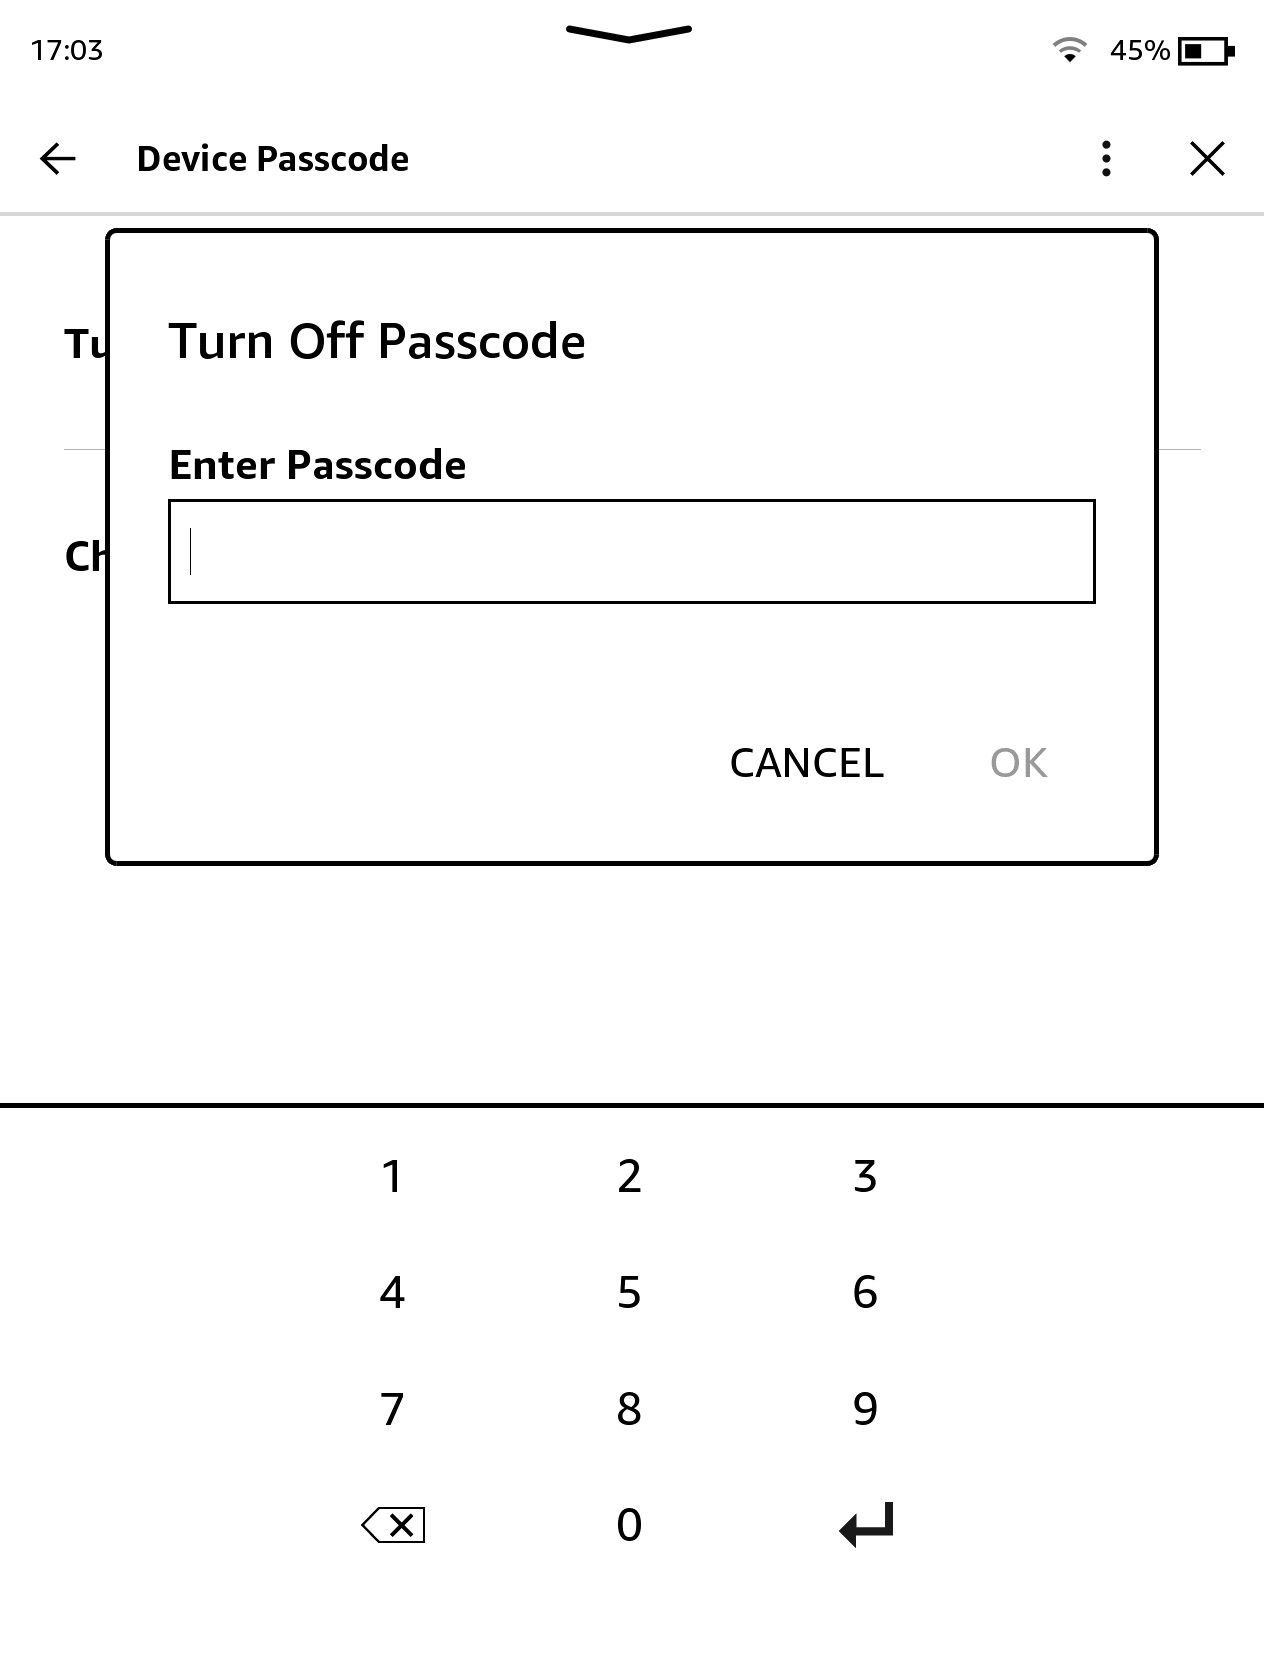 Screenshot of Amazon Kindle Turn Off Passcode screen